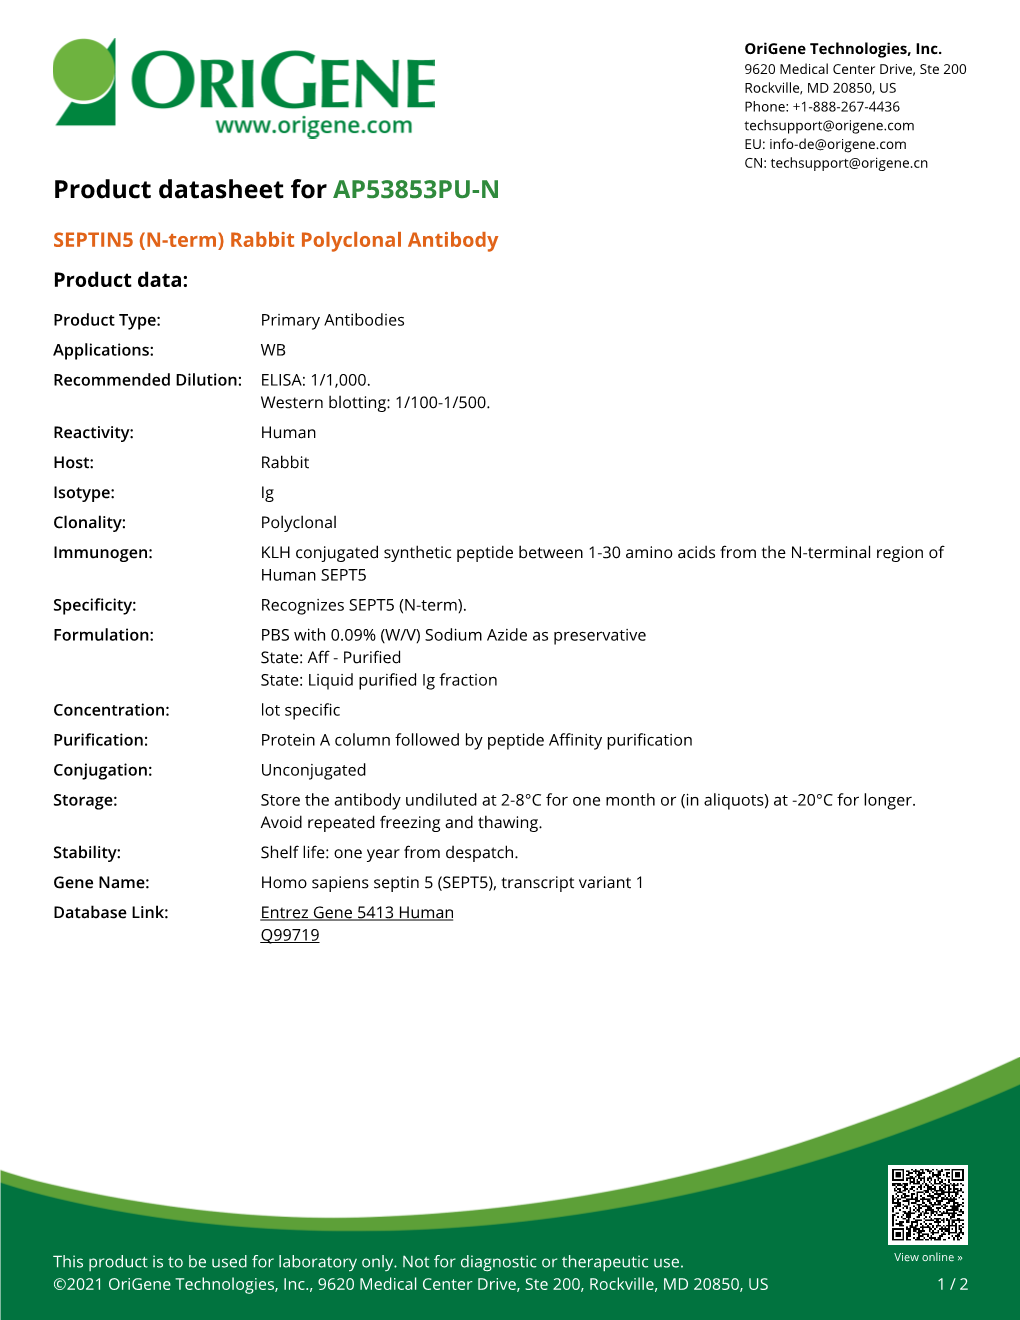 Rabbit Polyclonal Antibody – AP53853PU-N